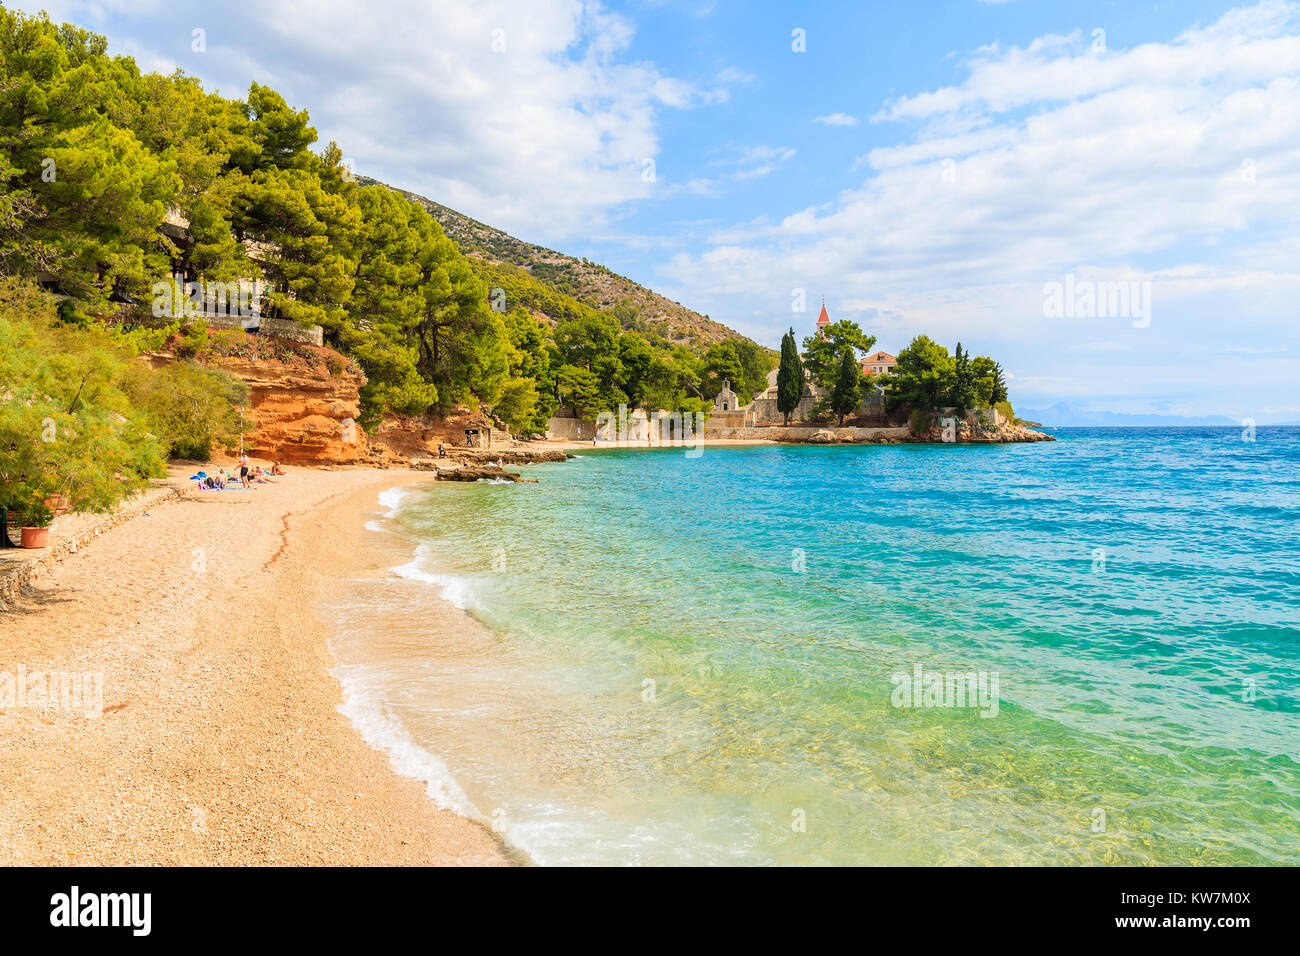 Beach with emerald green sea water and view of Dominican monastery in distance, Bol town, Brac island, Croatia Stock Photo